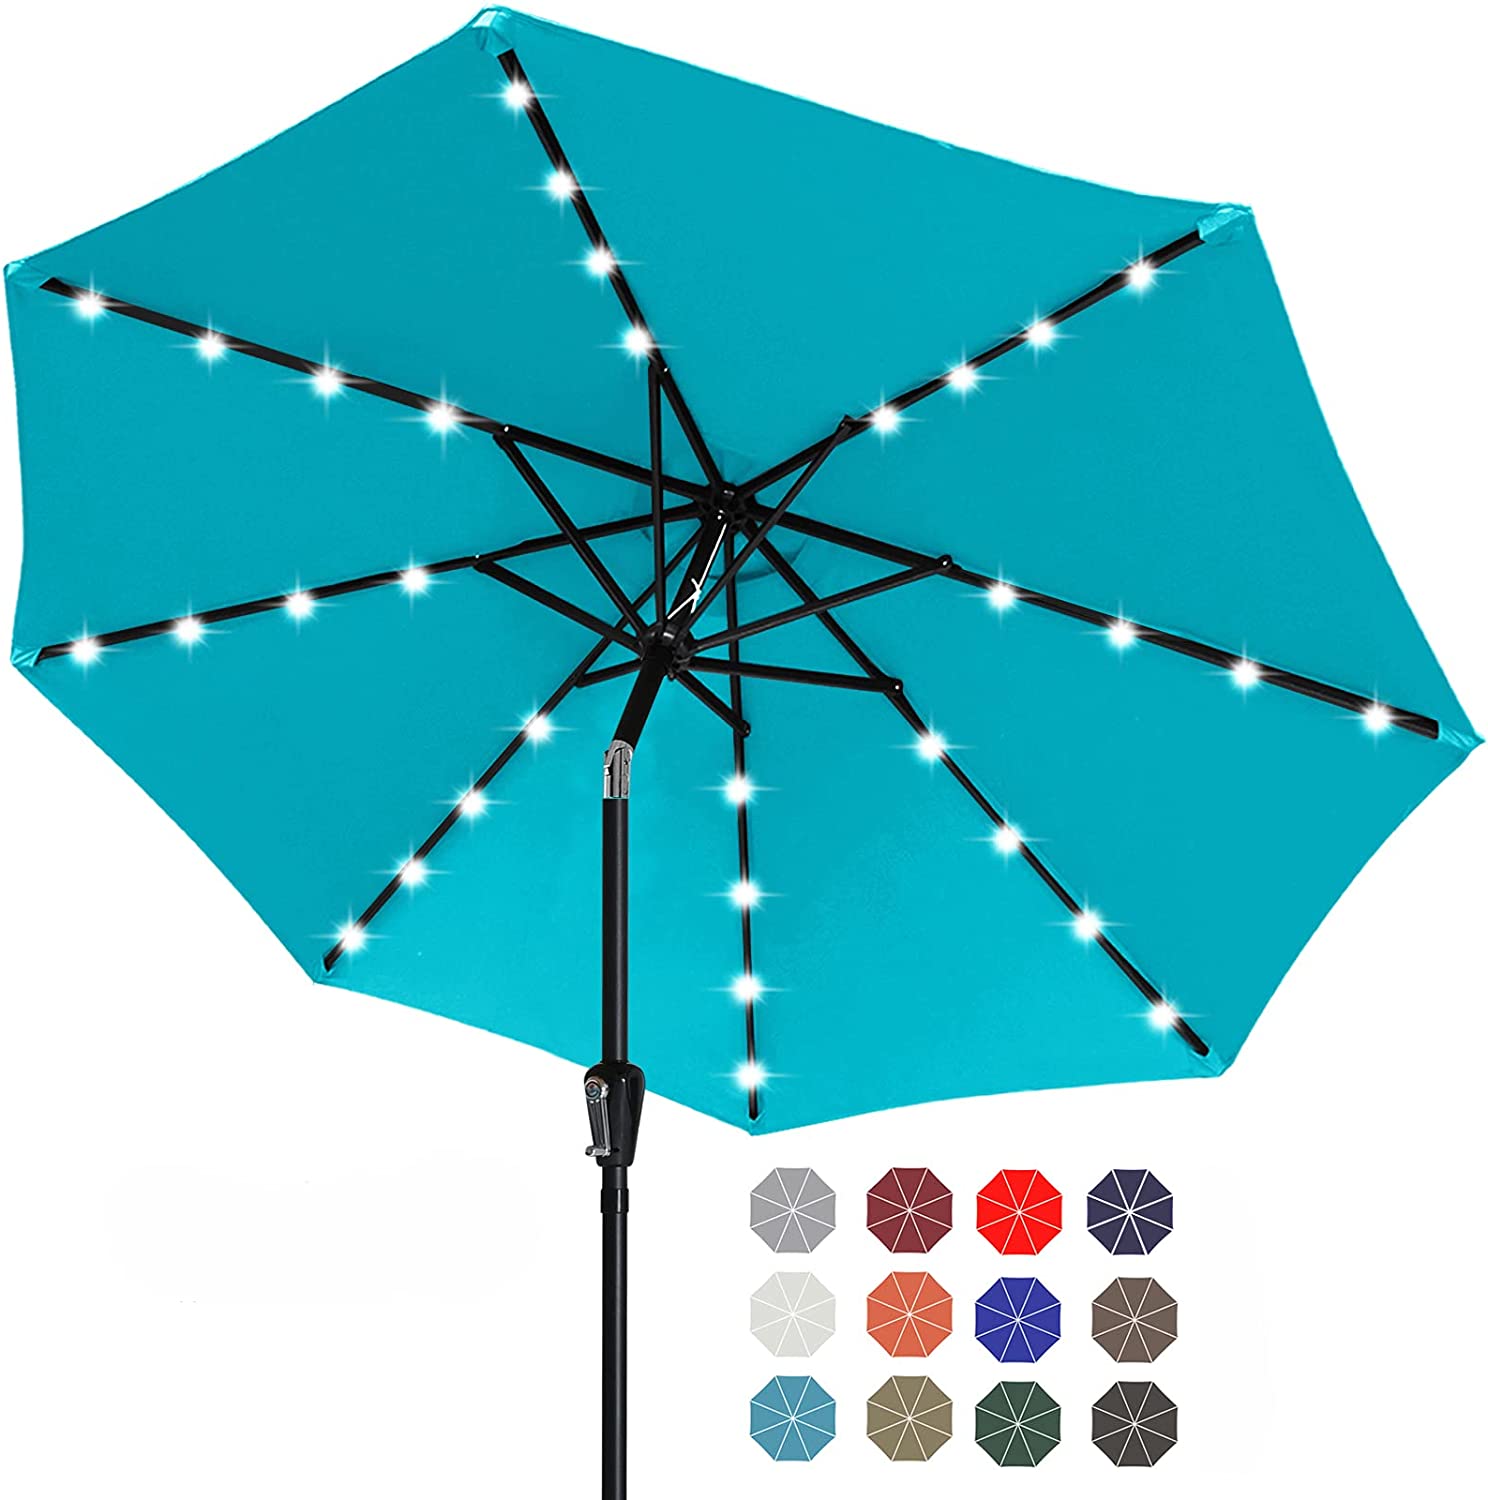 ABCCANOPY Waterproof Lighted Patio Umbrella, 9-Foot